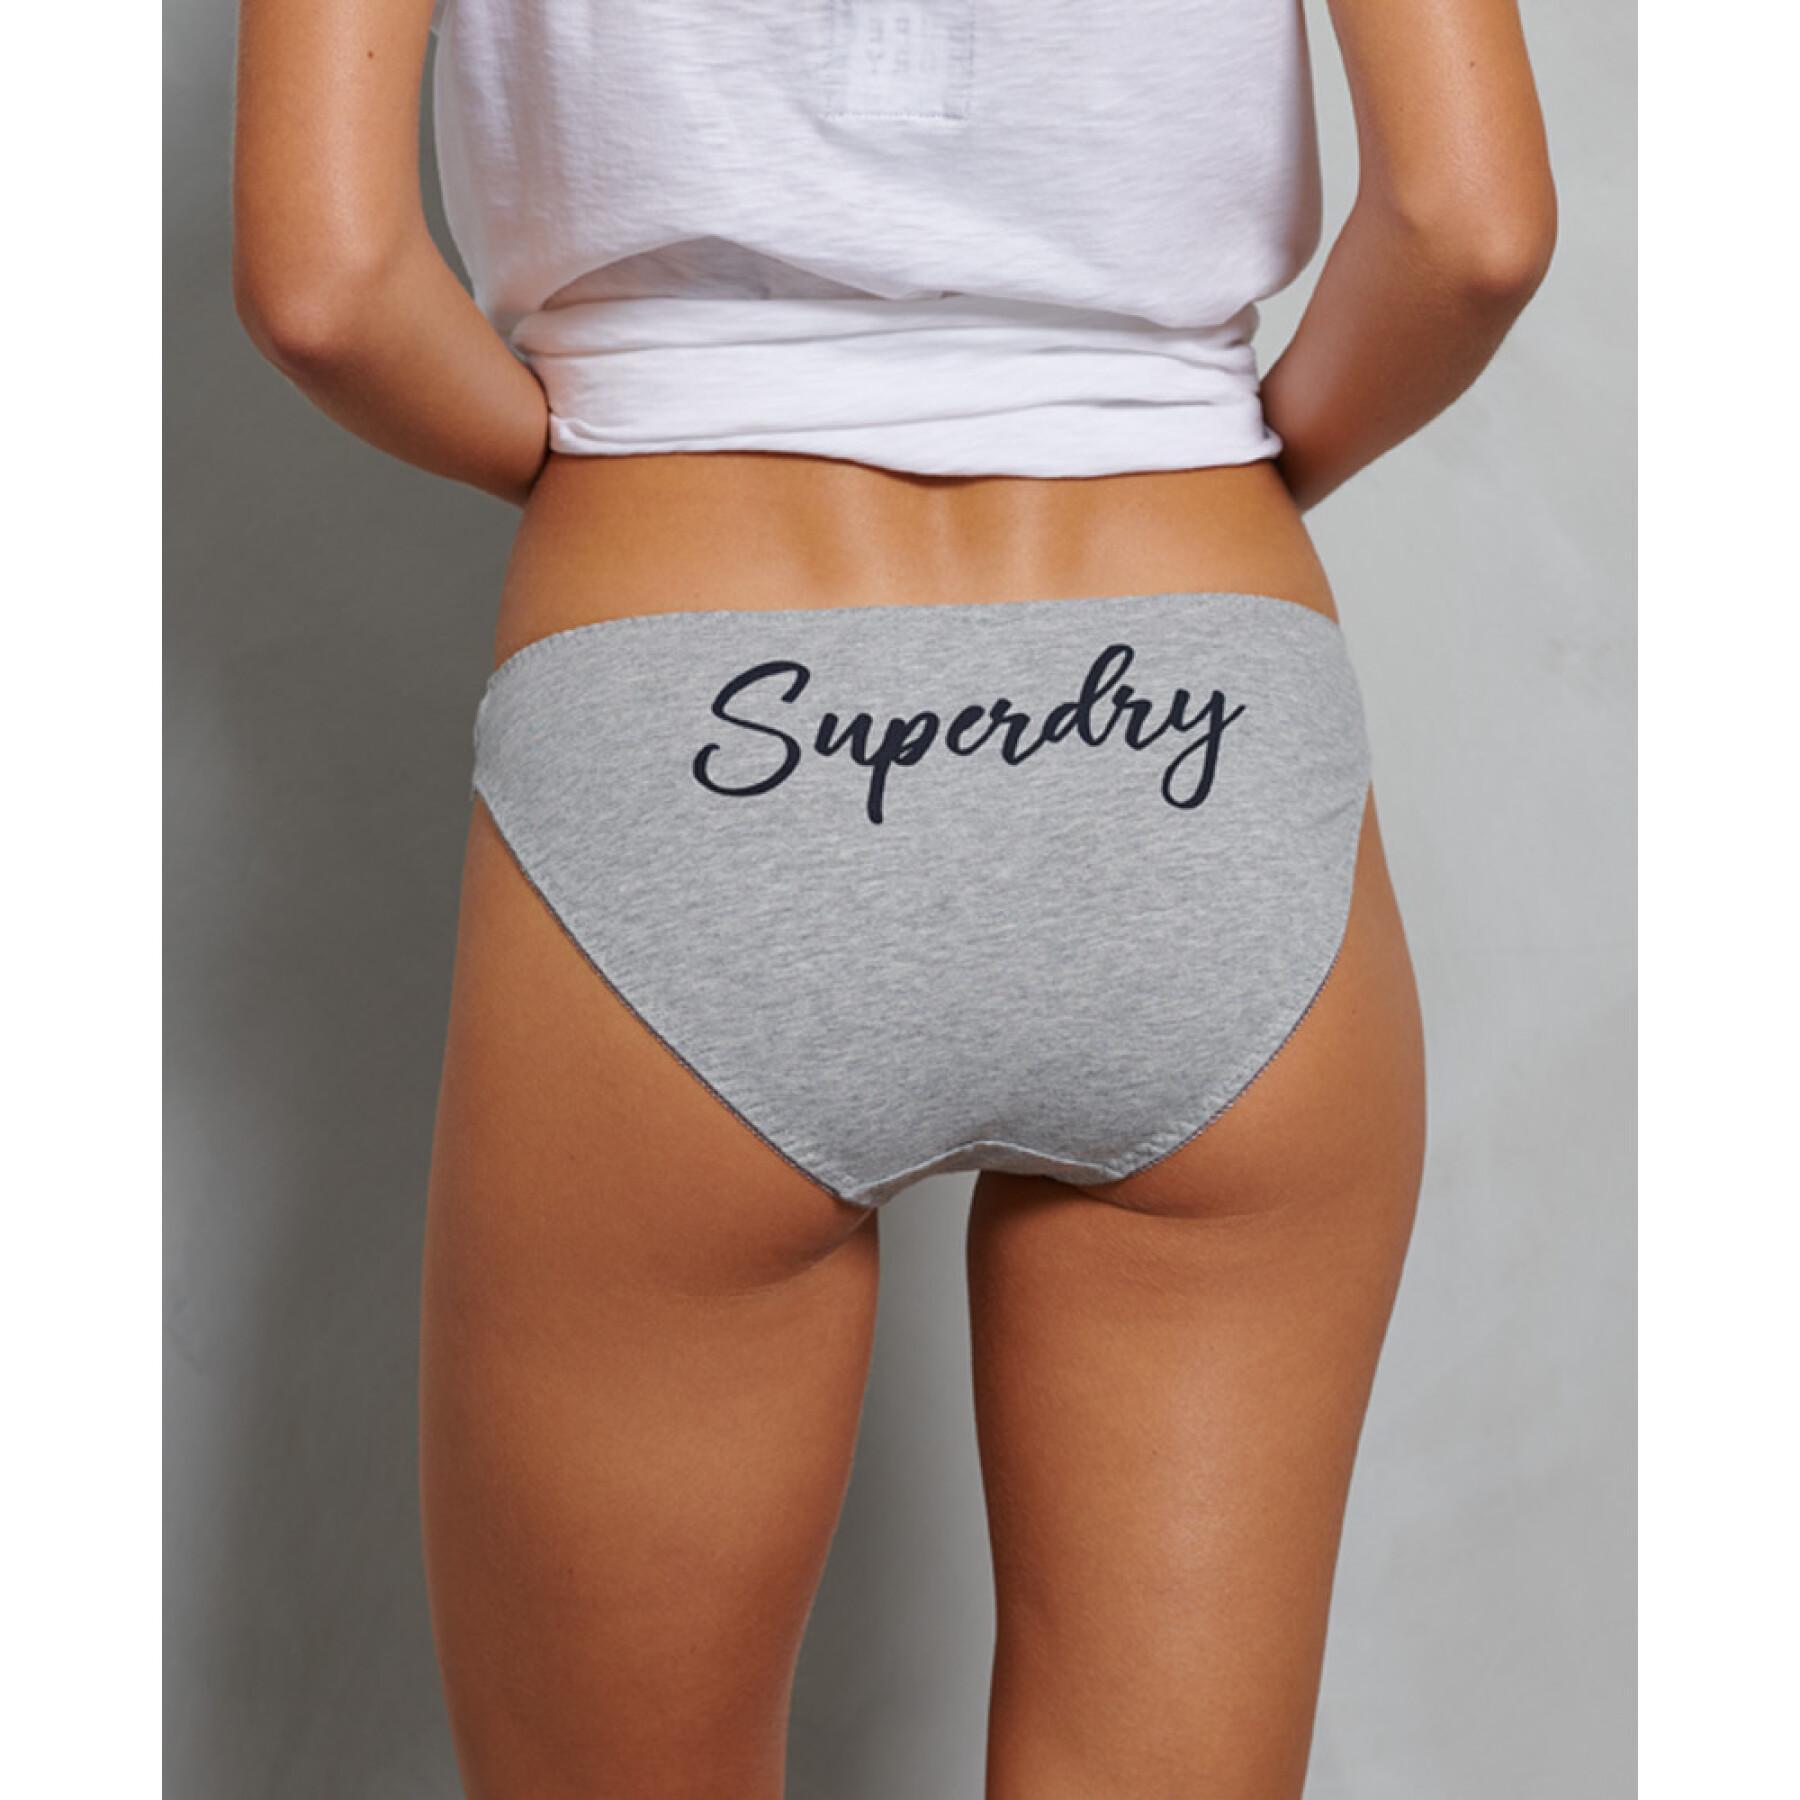 Vrouwenondergoed Superdry Super Standard (x3)